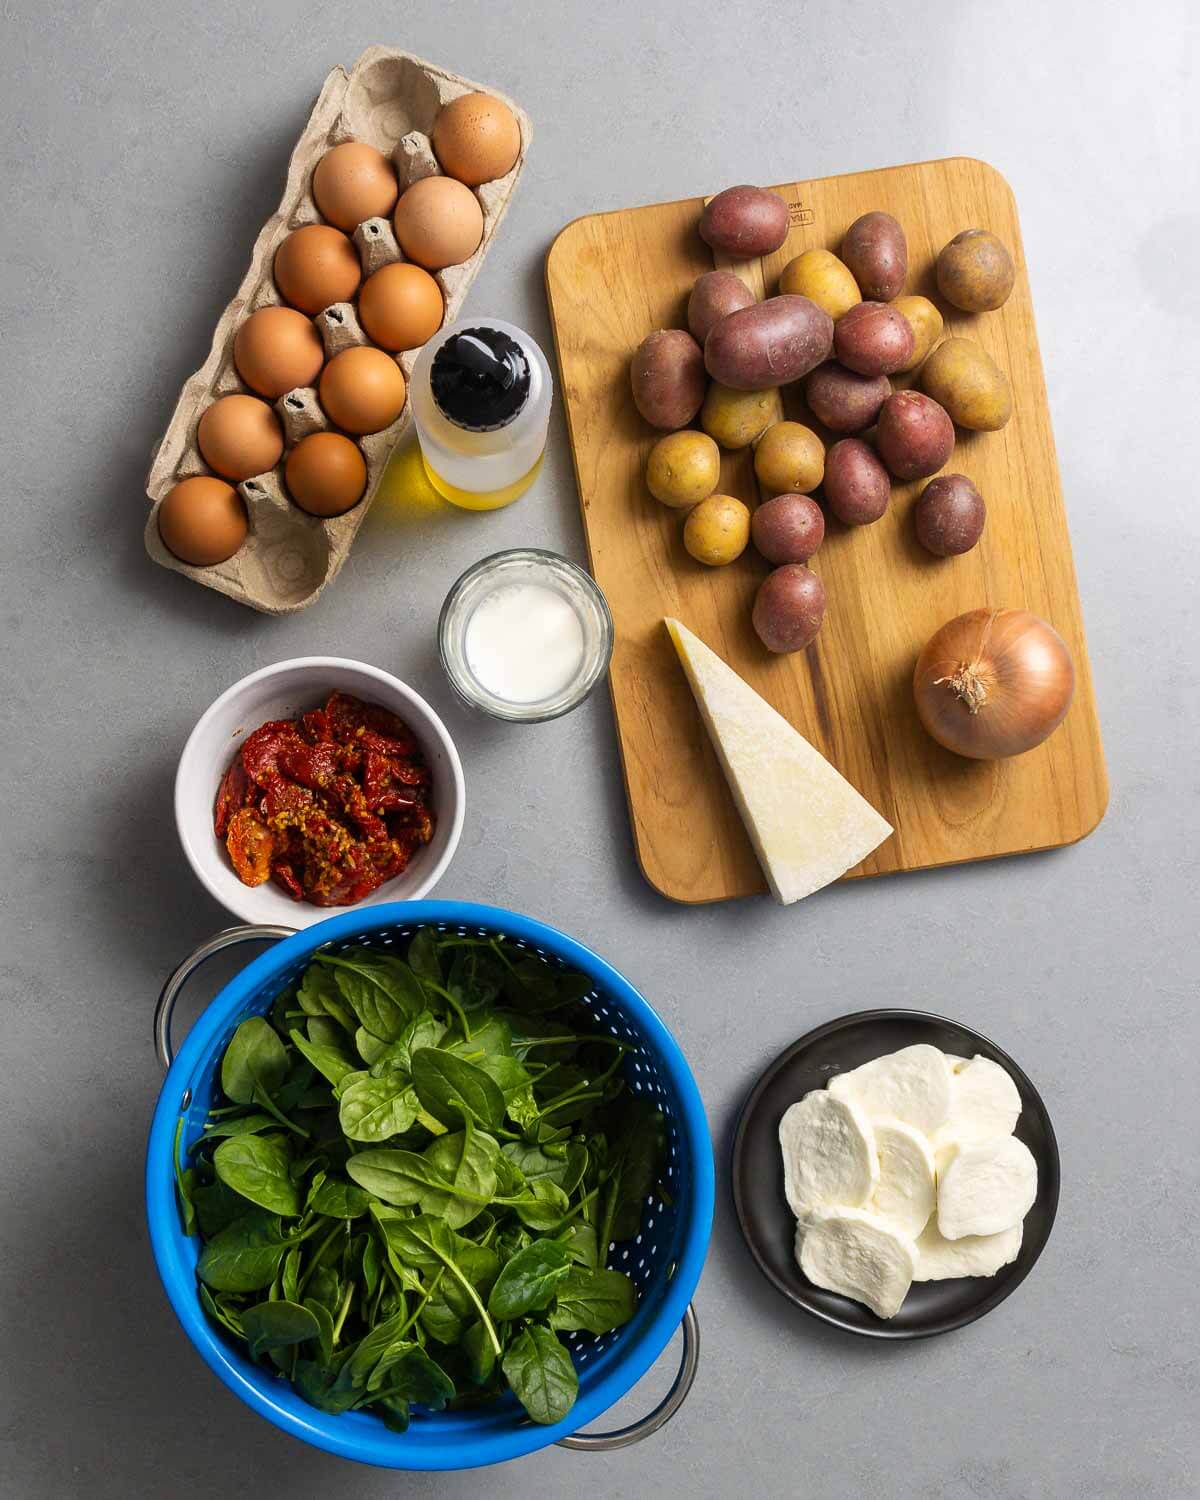 Ingredients shown: eggs, olive oil, milk, potatoes, onion, sun-dried tomatoes, spinach, Pecorino Romano, and sliced fresh mozzarella cheese.